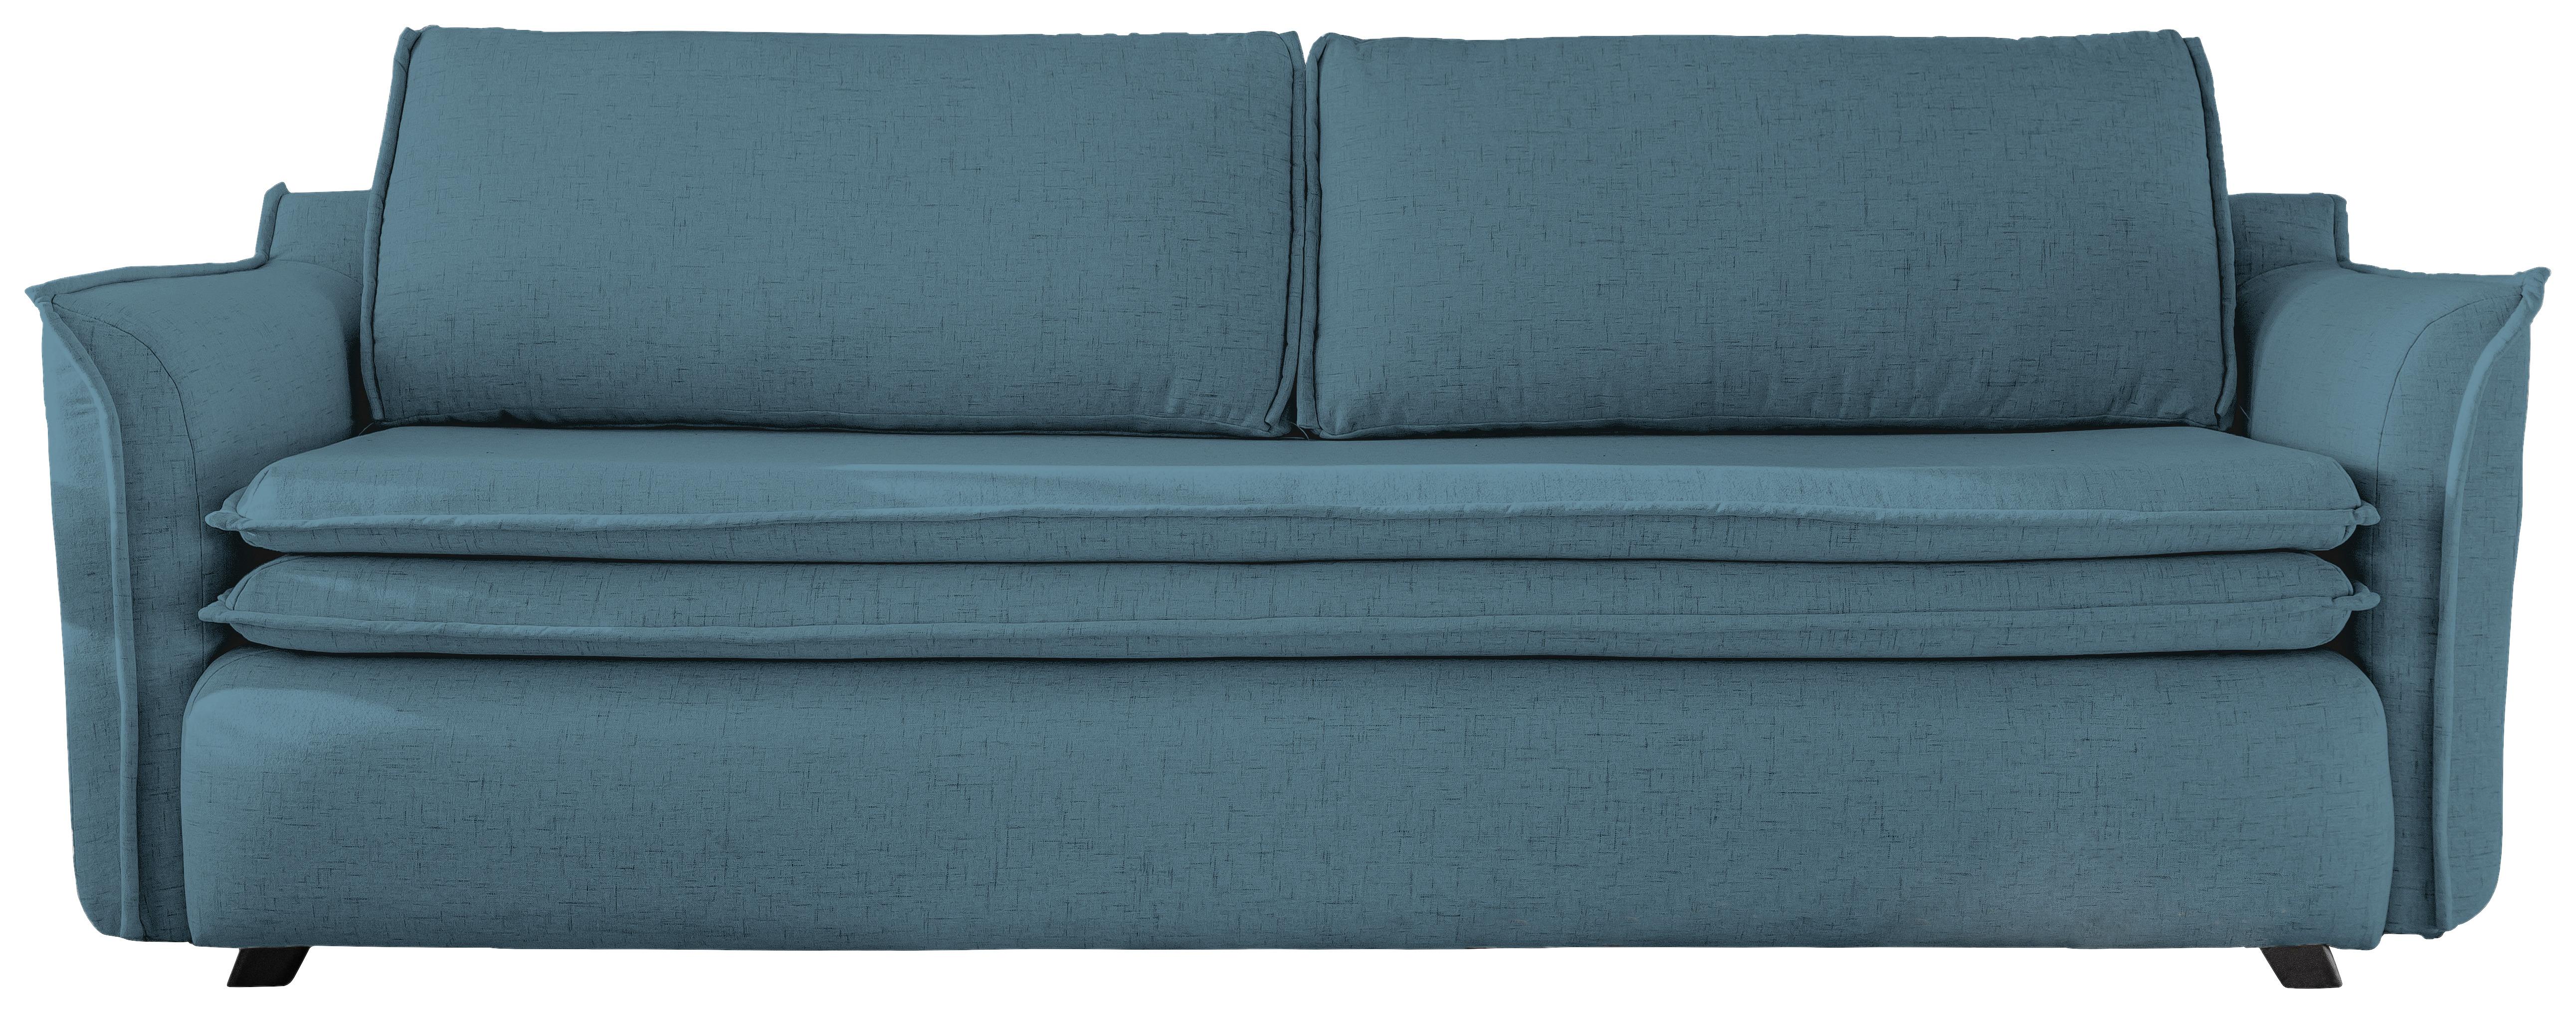 Dreisitzer-Sofa in Blau/ Türkis ´CHARMING CHARLIE´ - Blau/Petrol, Basics, Holz/Holzwerkstoff (225/85/90cm) - MID.YOU